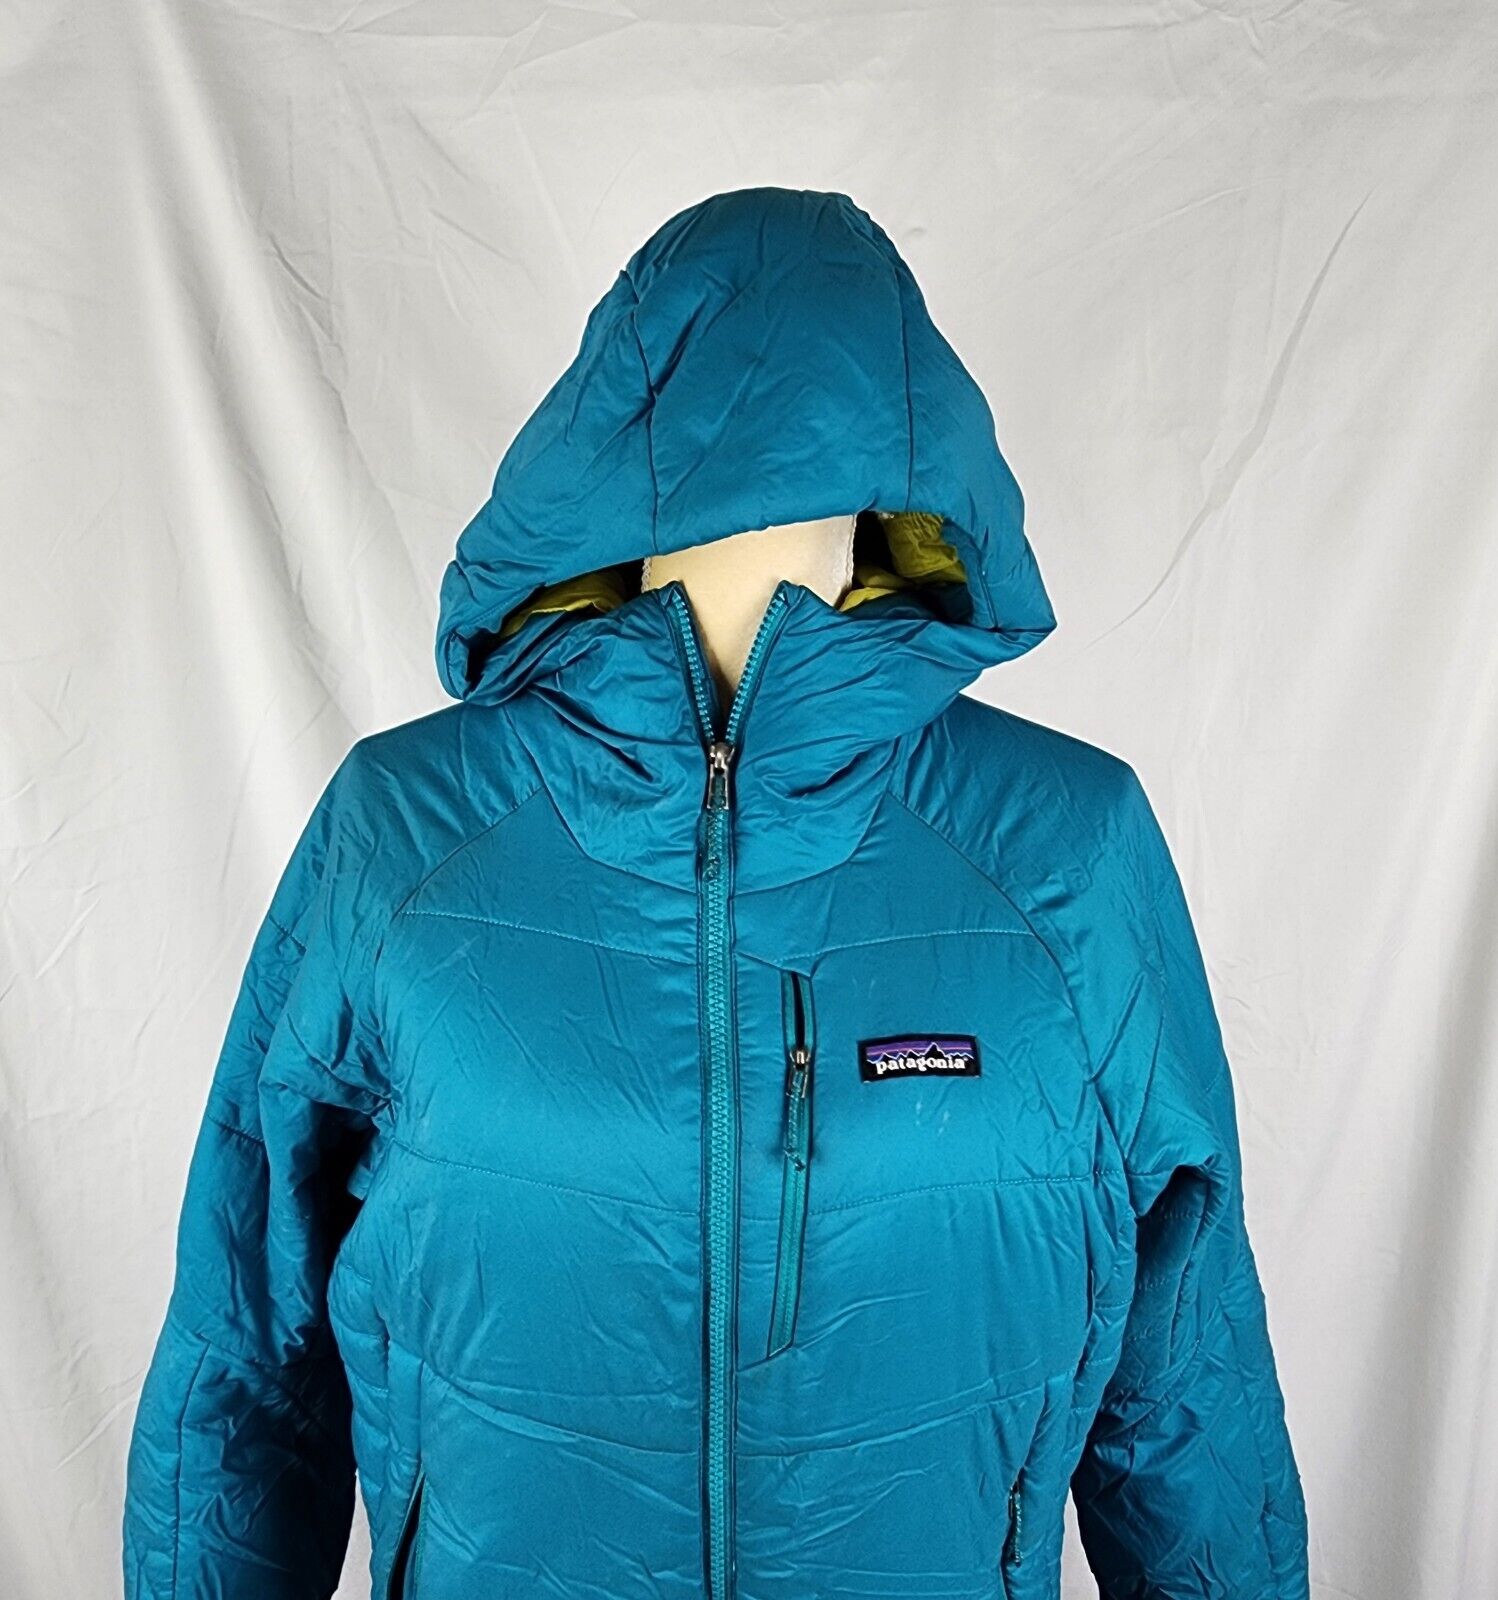 Patagonia Hyper Puff Parka Women's Full Zip Jacket sz M | eBay